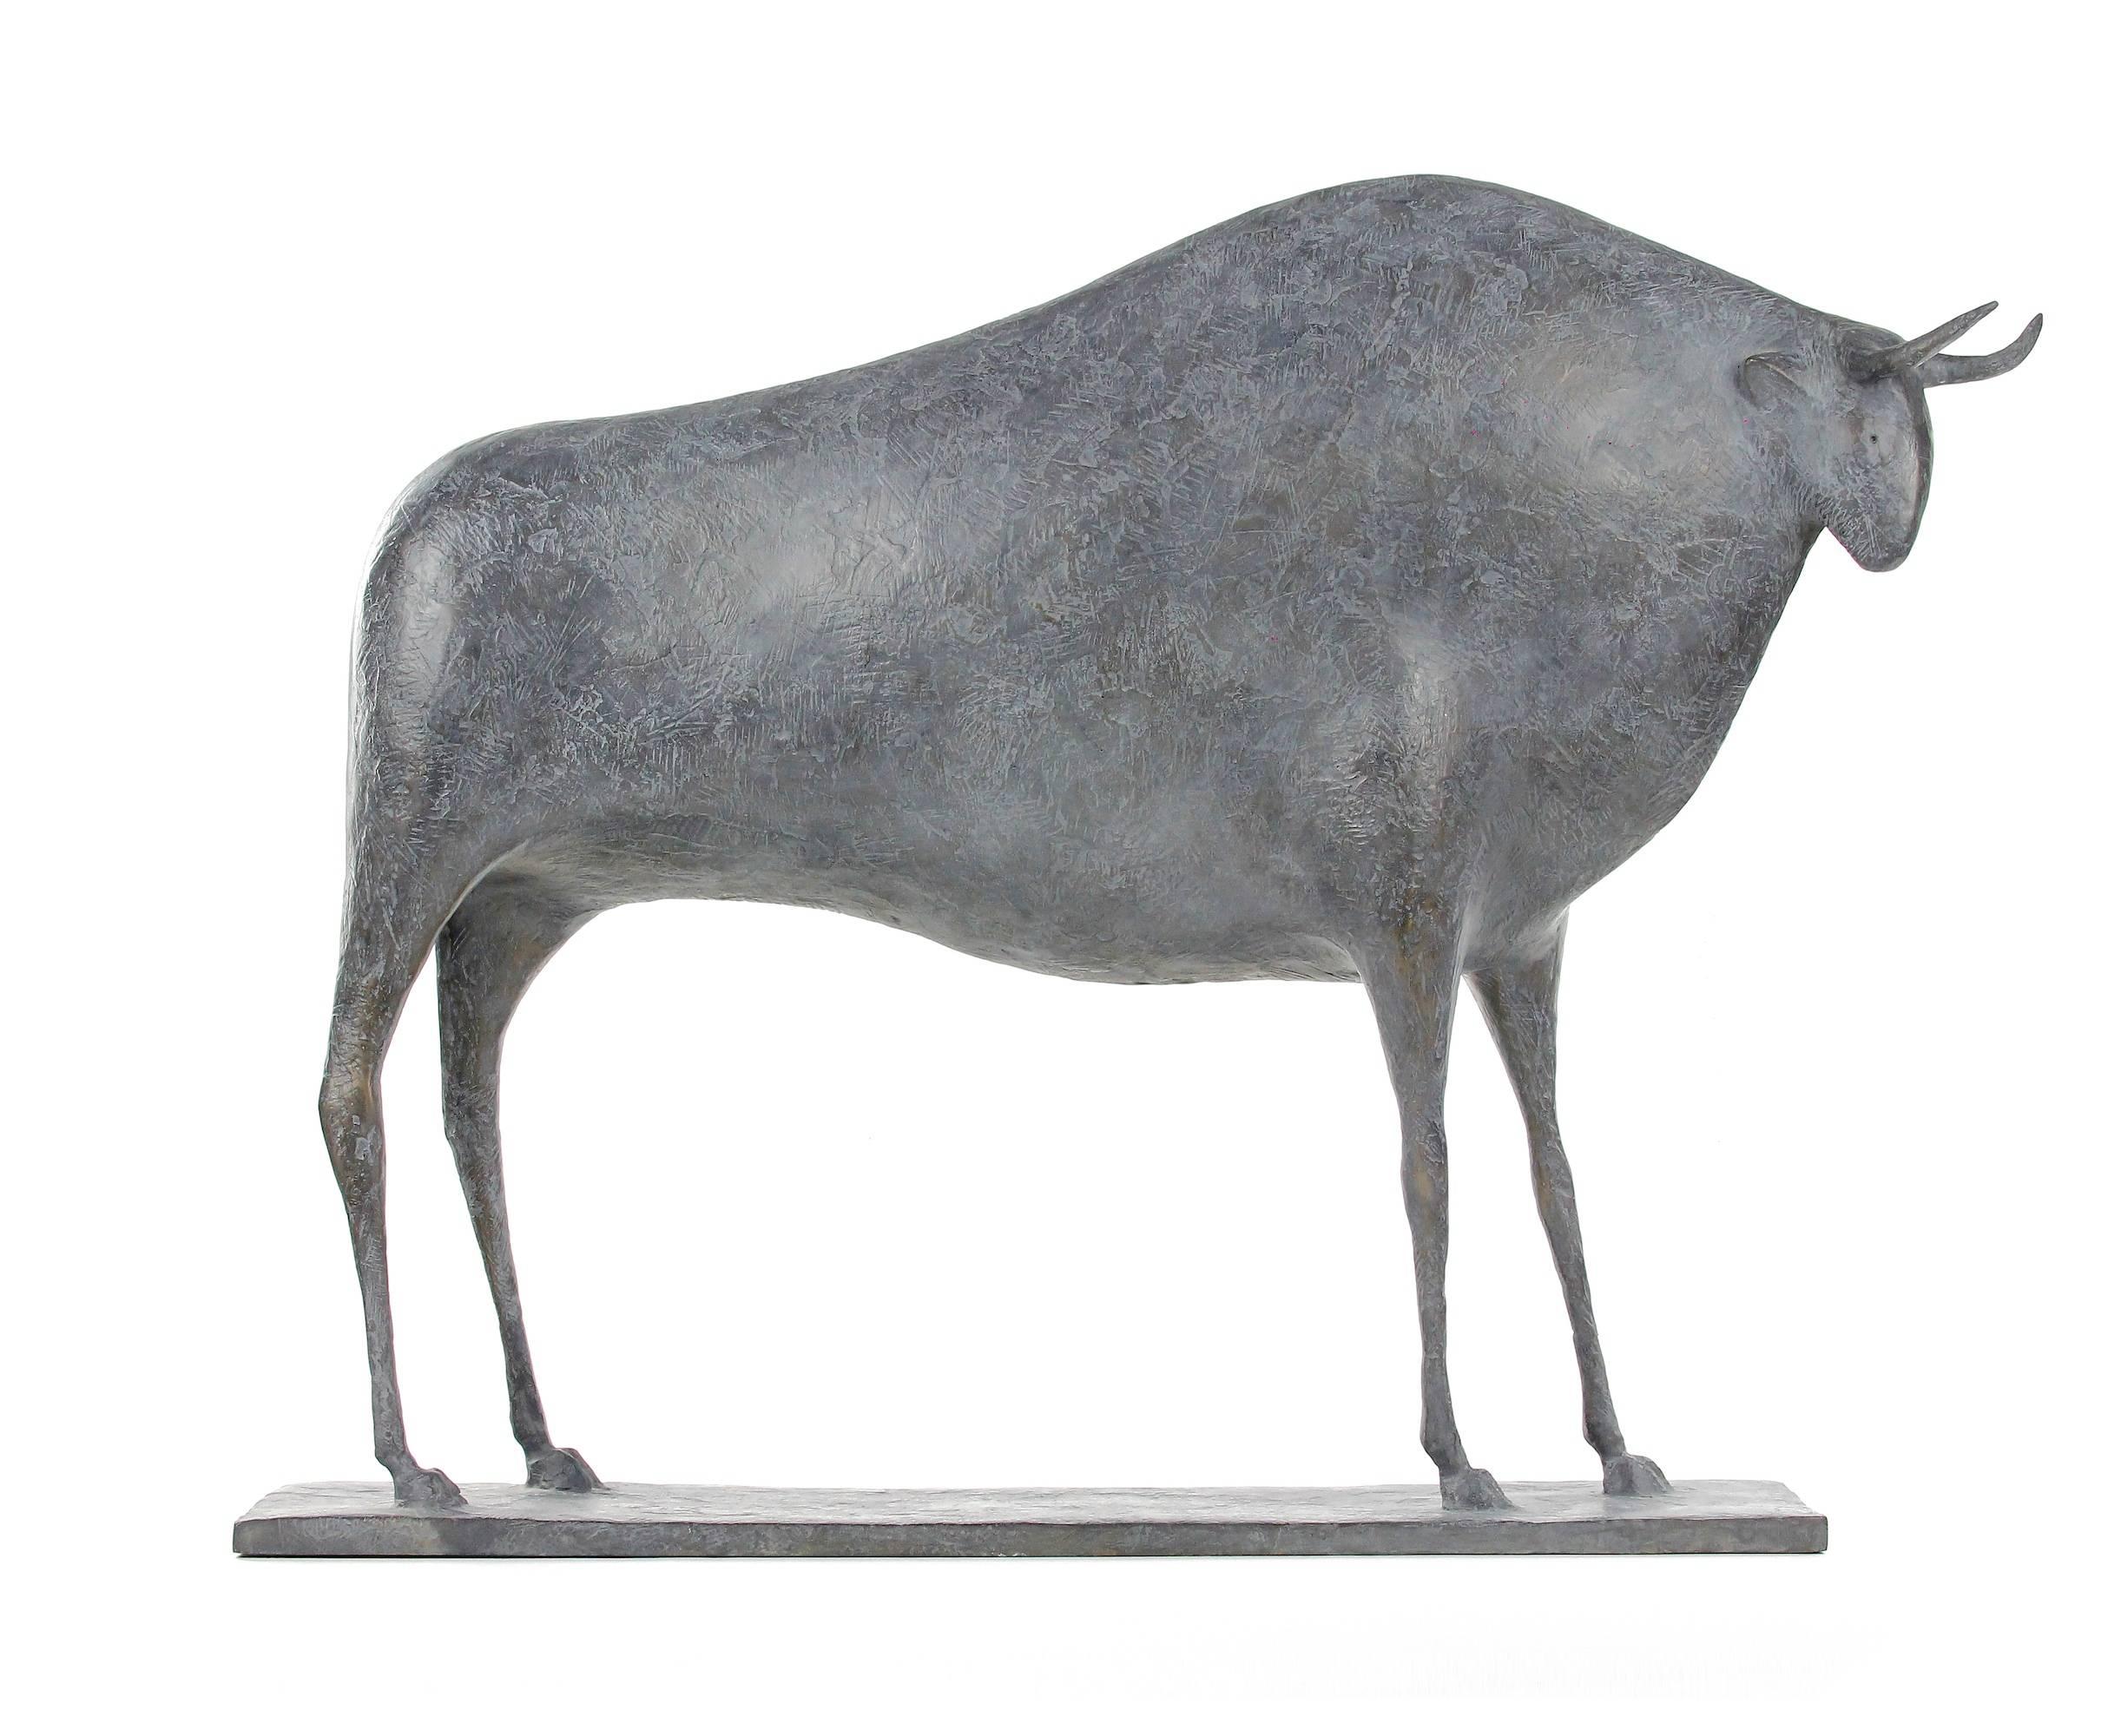 Taureau V (Bull V) by Pierre Yermia - Animal Bronze Sculpture